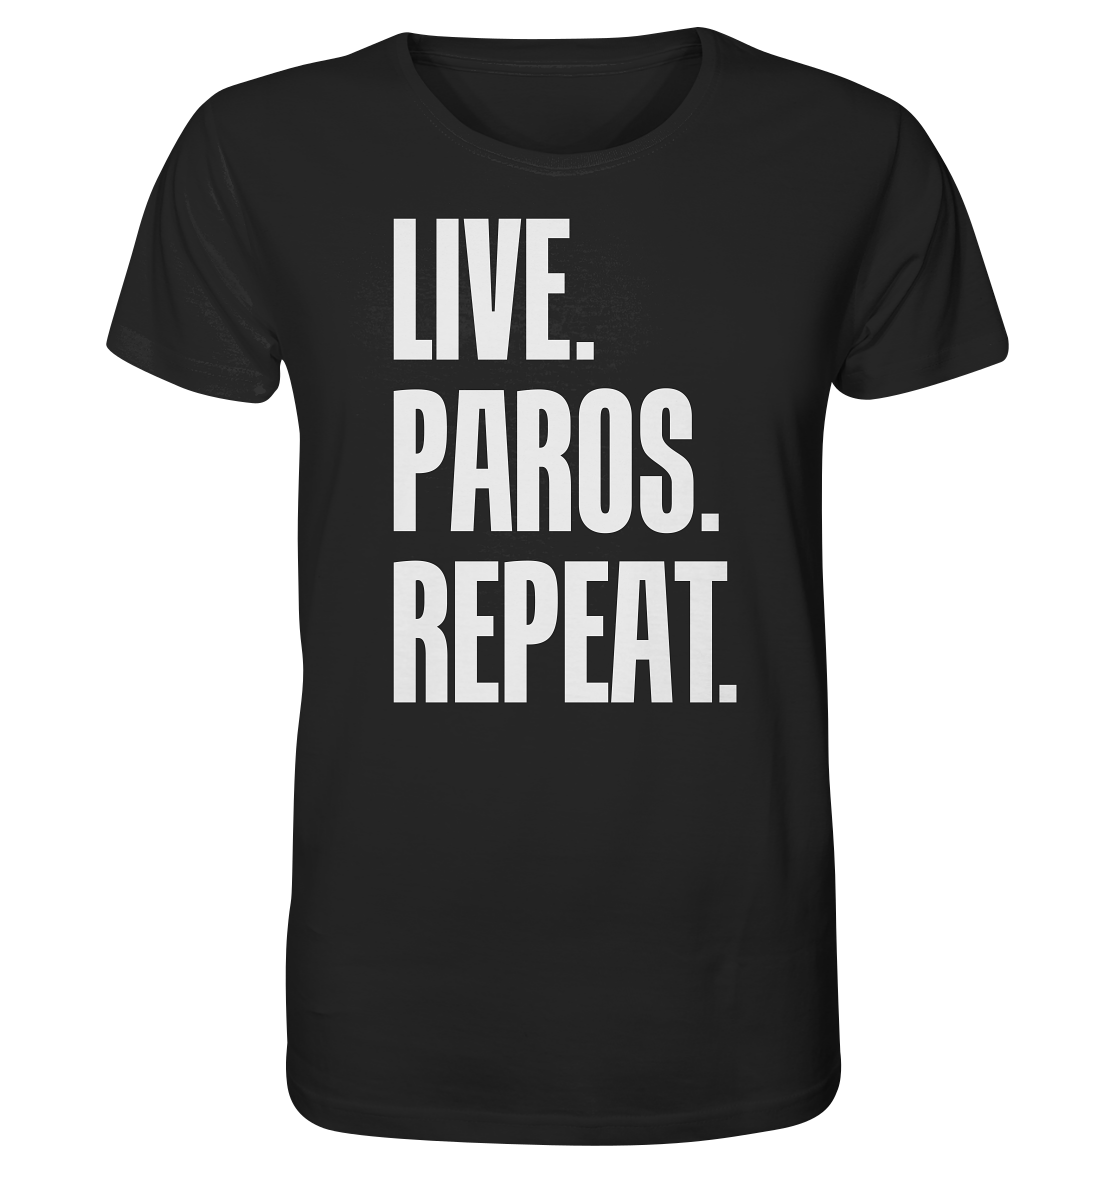 LIVE. PAROS. REPEAT. - Organic Shirt